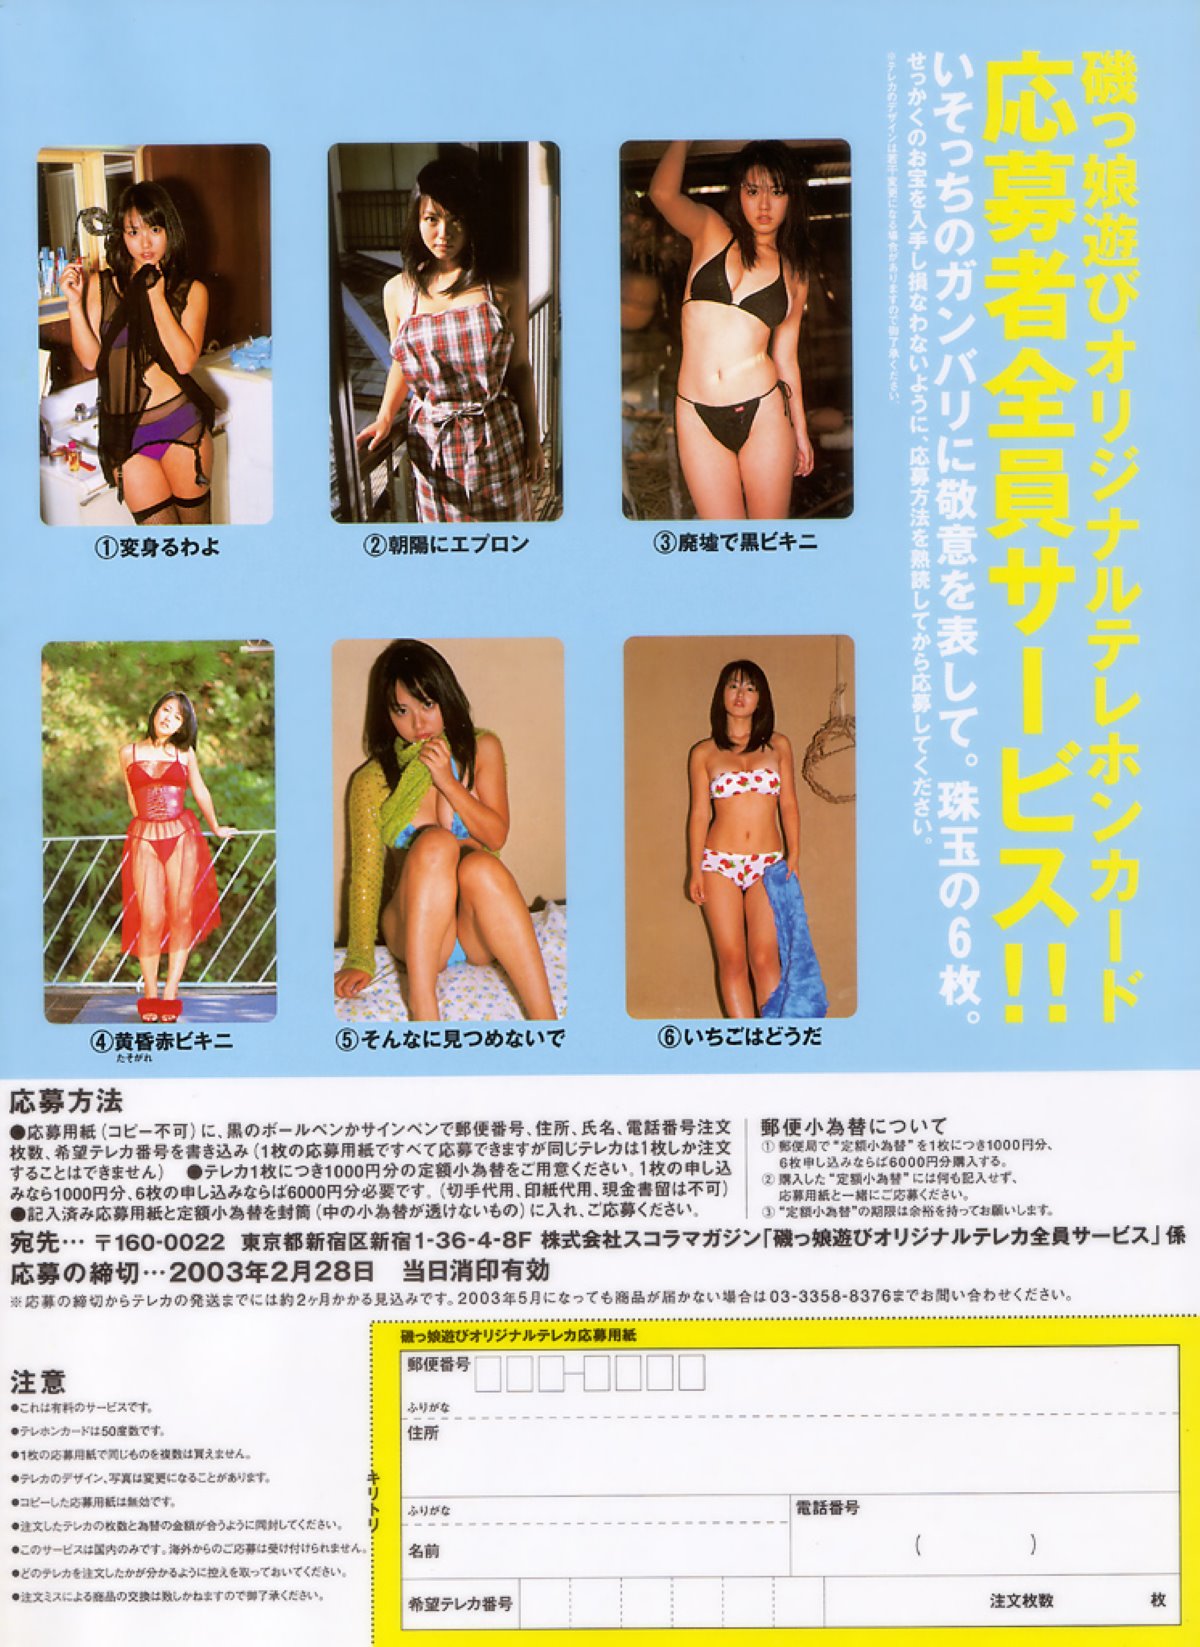 Photobook Sayaka Isoyama 磯山さやか Playing With An Island Girl 0061 3365027369.jpg